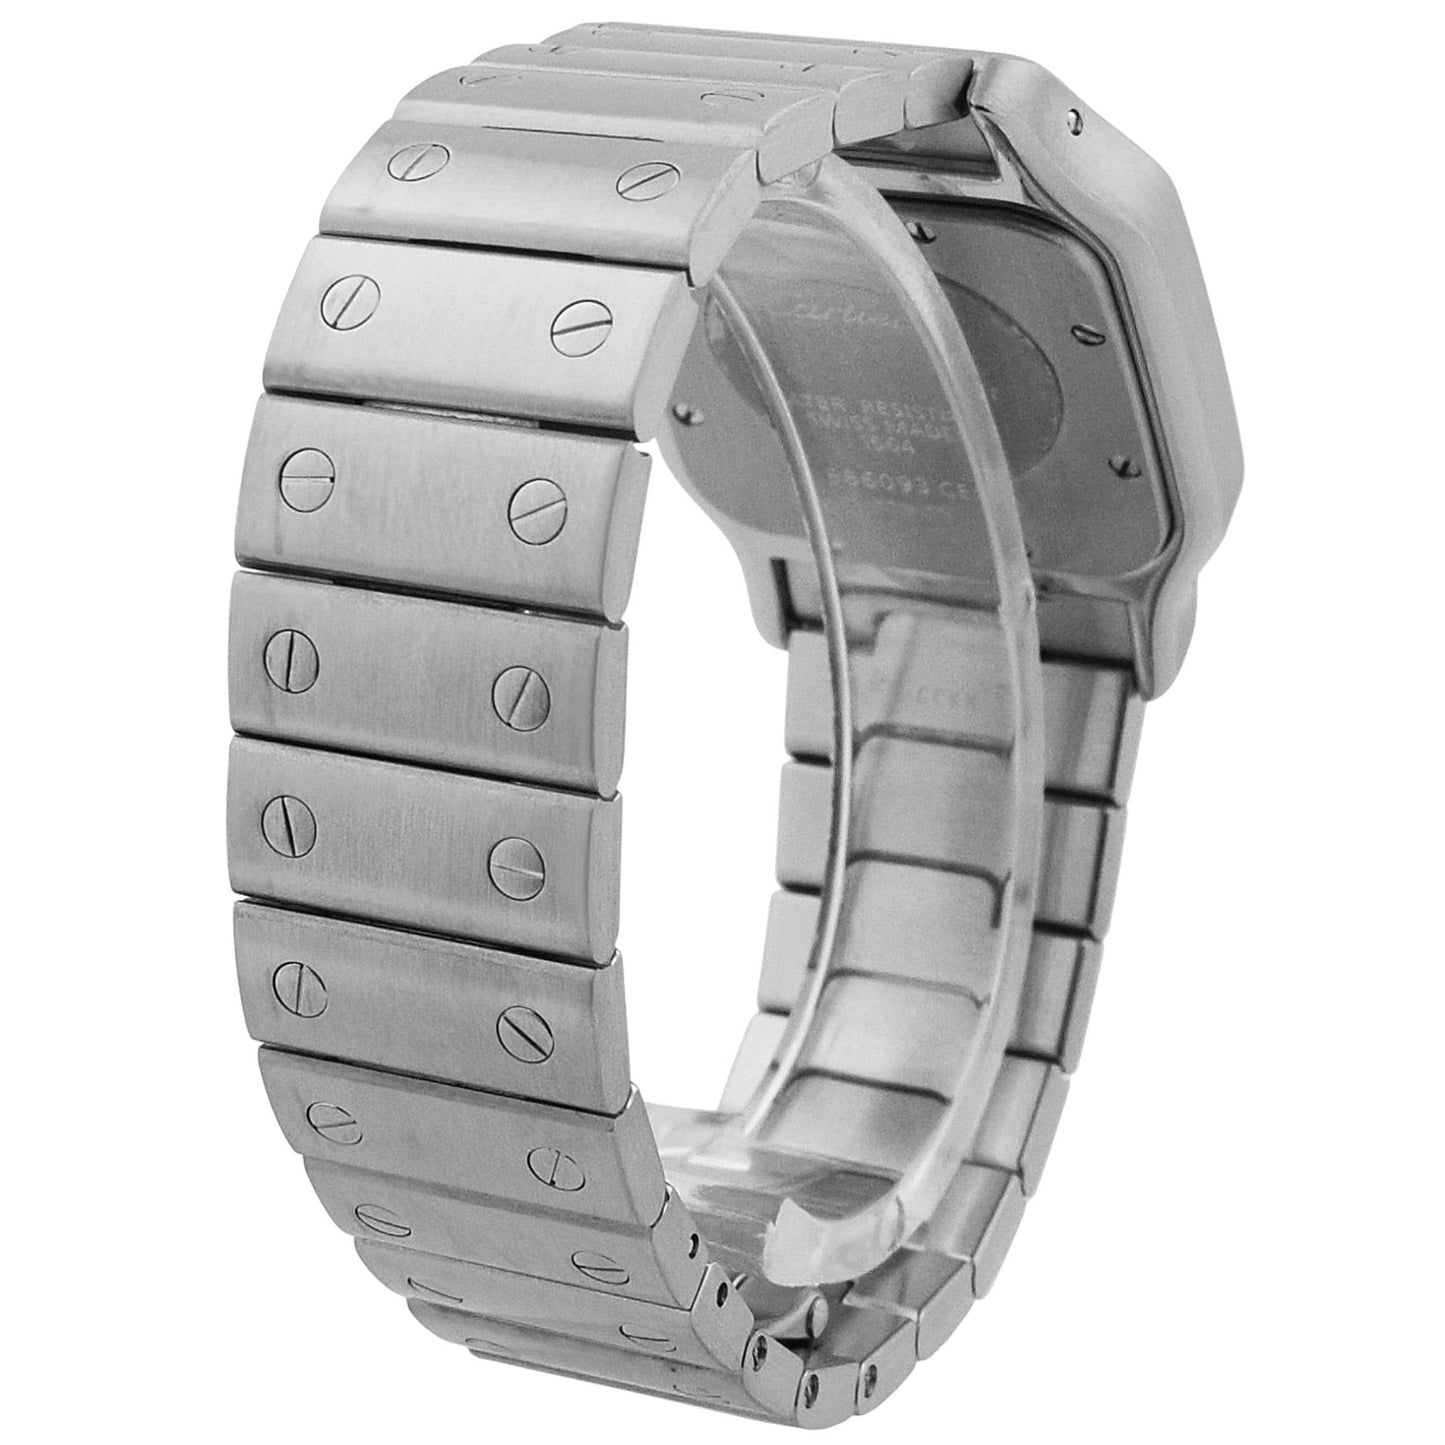 Cartier Ladys Quartz Santos Galbee Stainless Steel 34.8 mm x 26.2 mm Silver Roman Dial Watch Reference #: W20056D6 - Happy Jewelers Fine Jewelry Lifetime Warranty